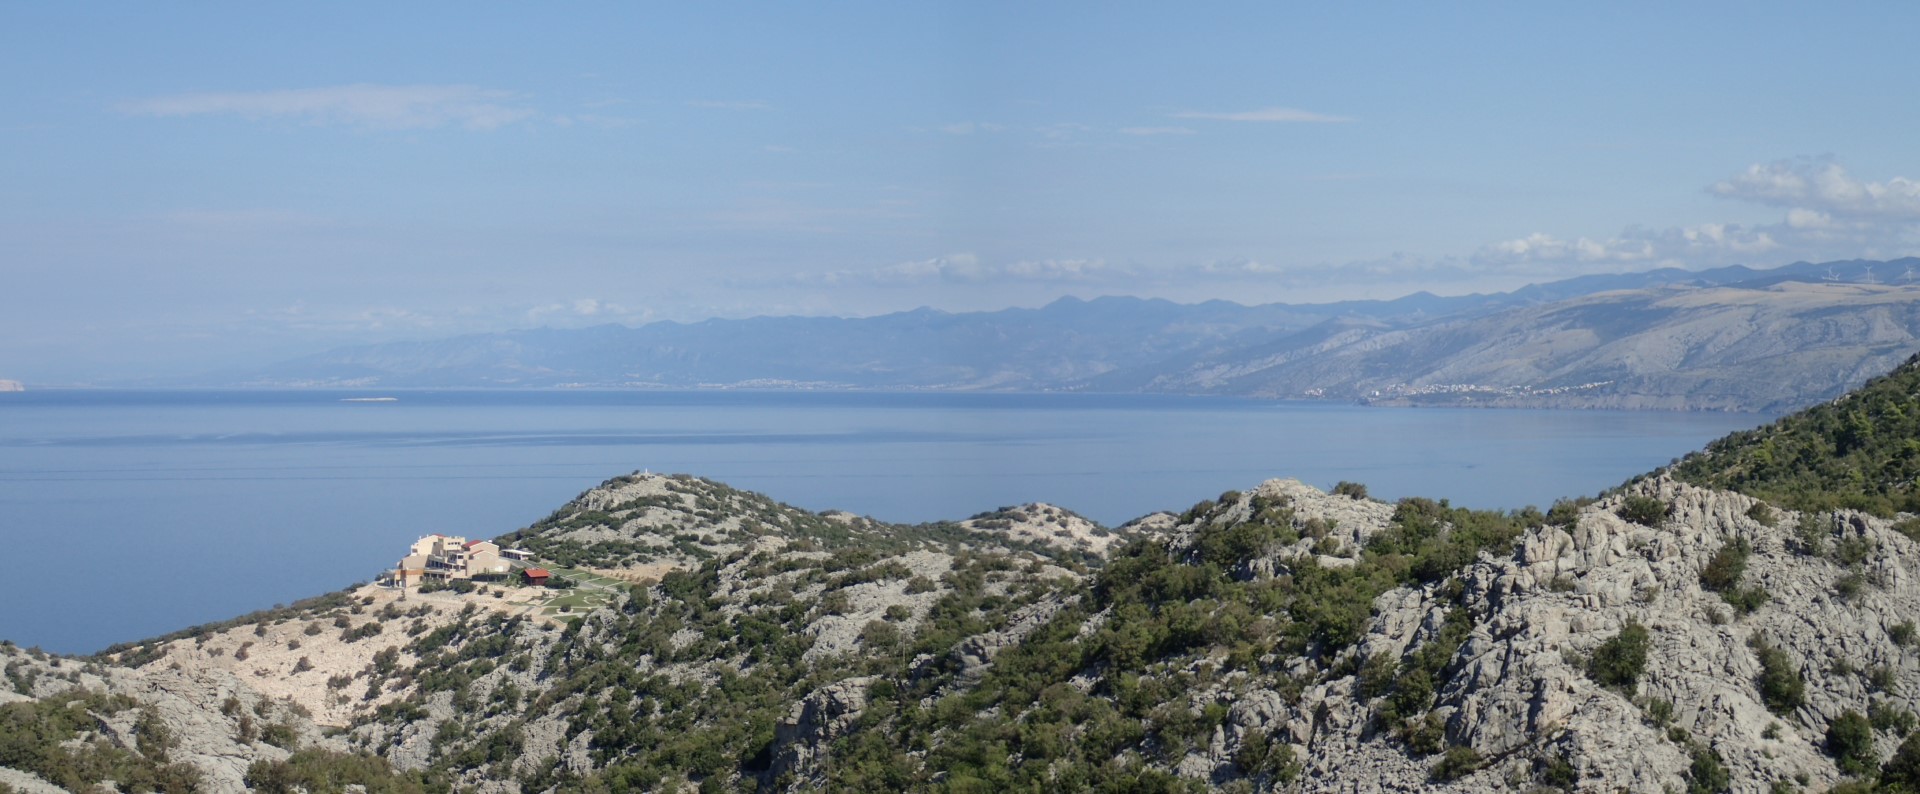 Looking north along the Dalmatian coast